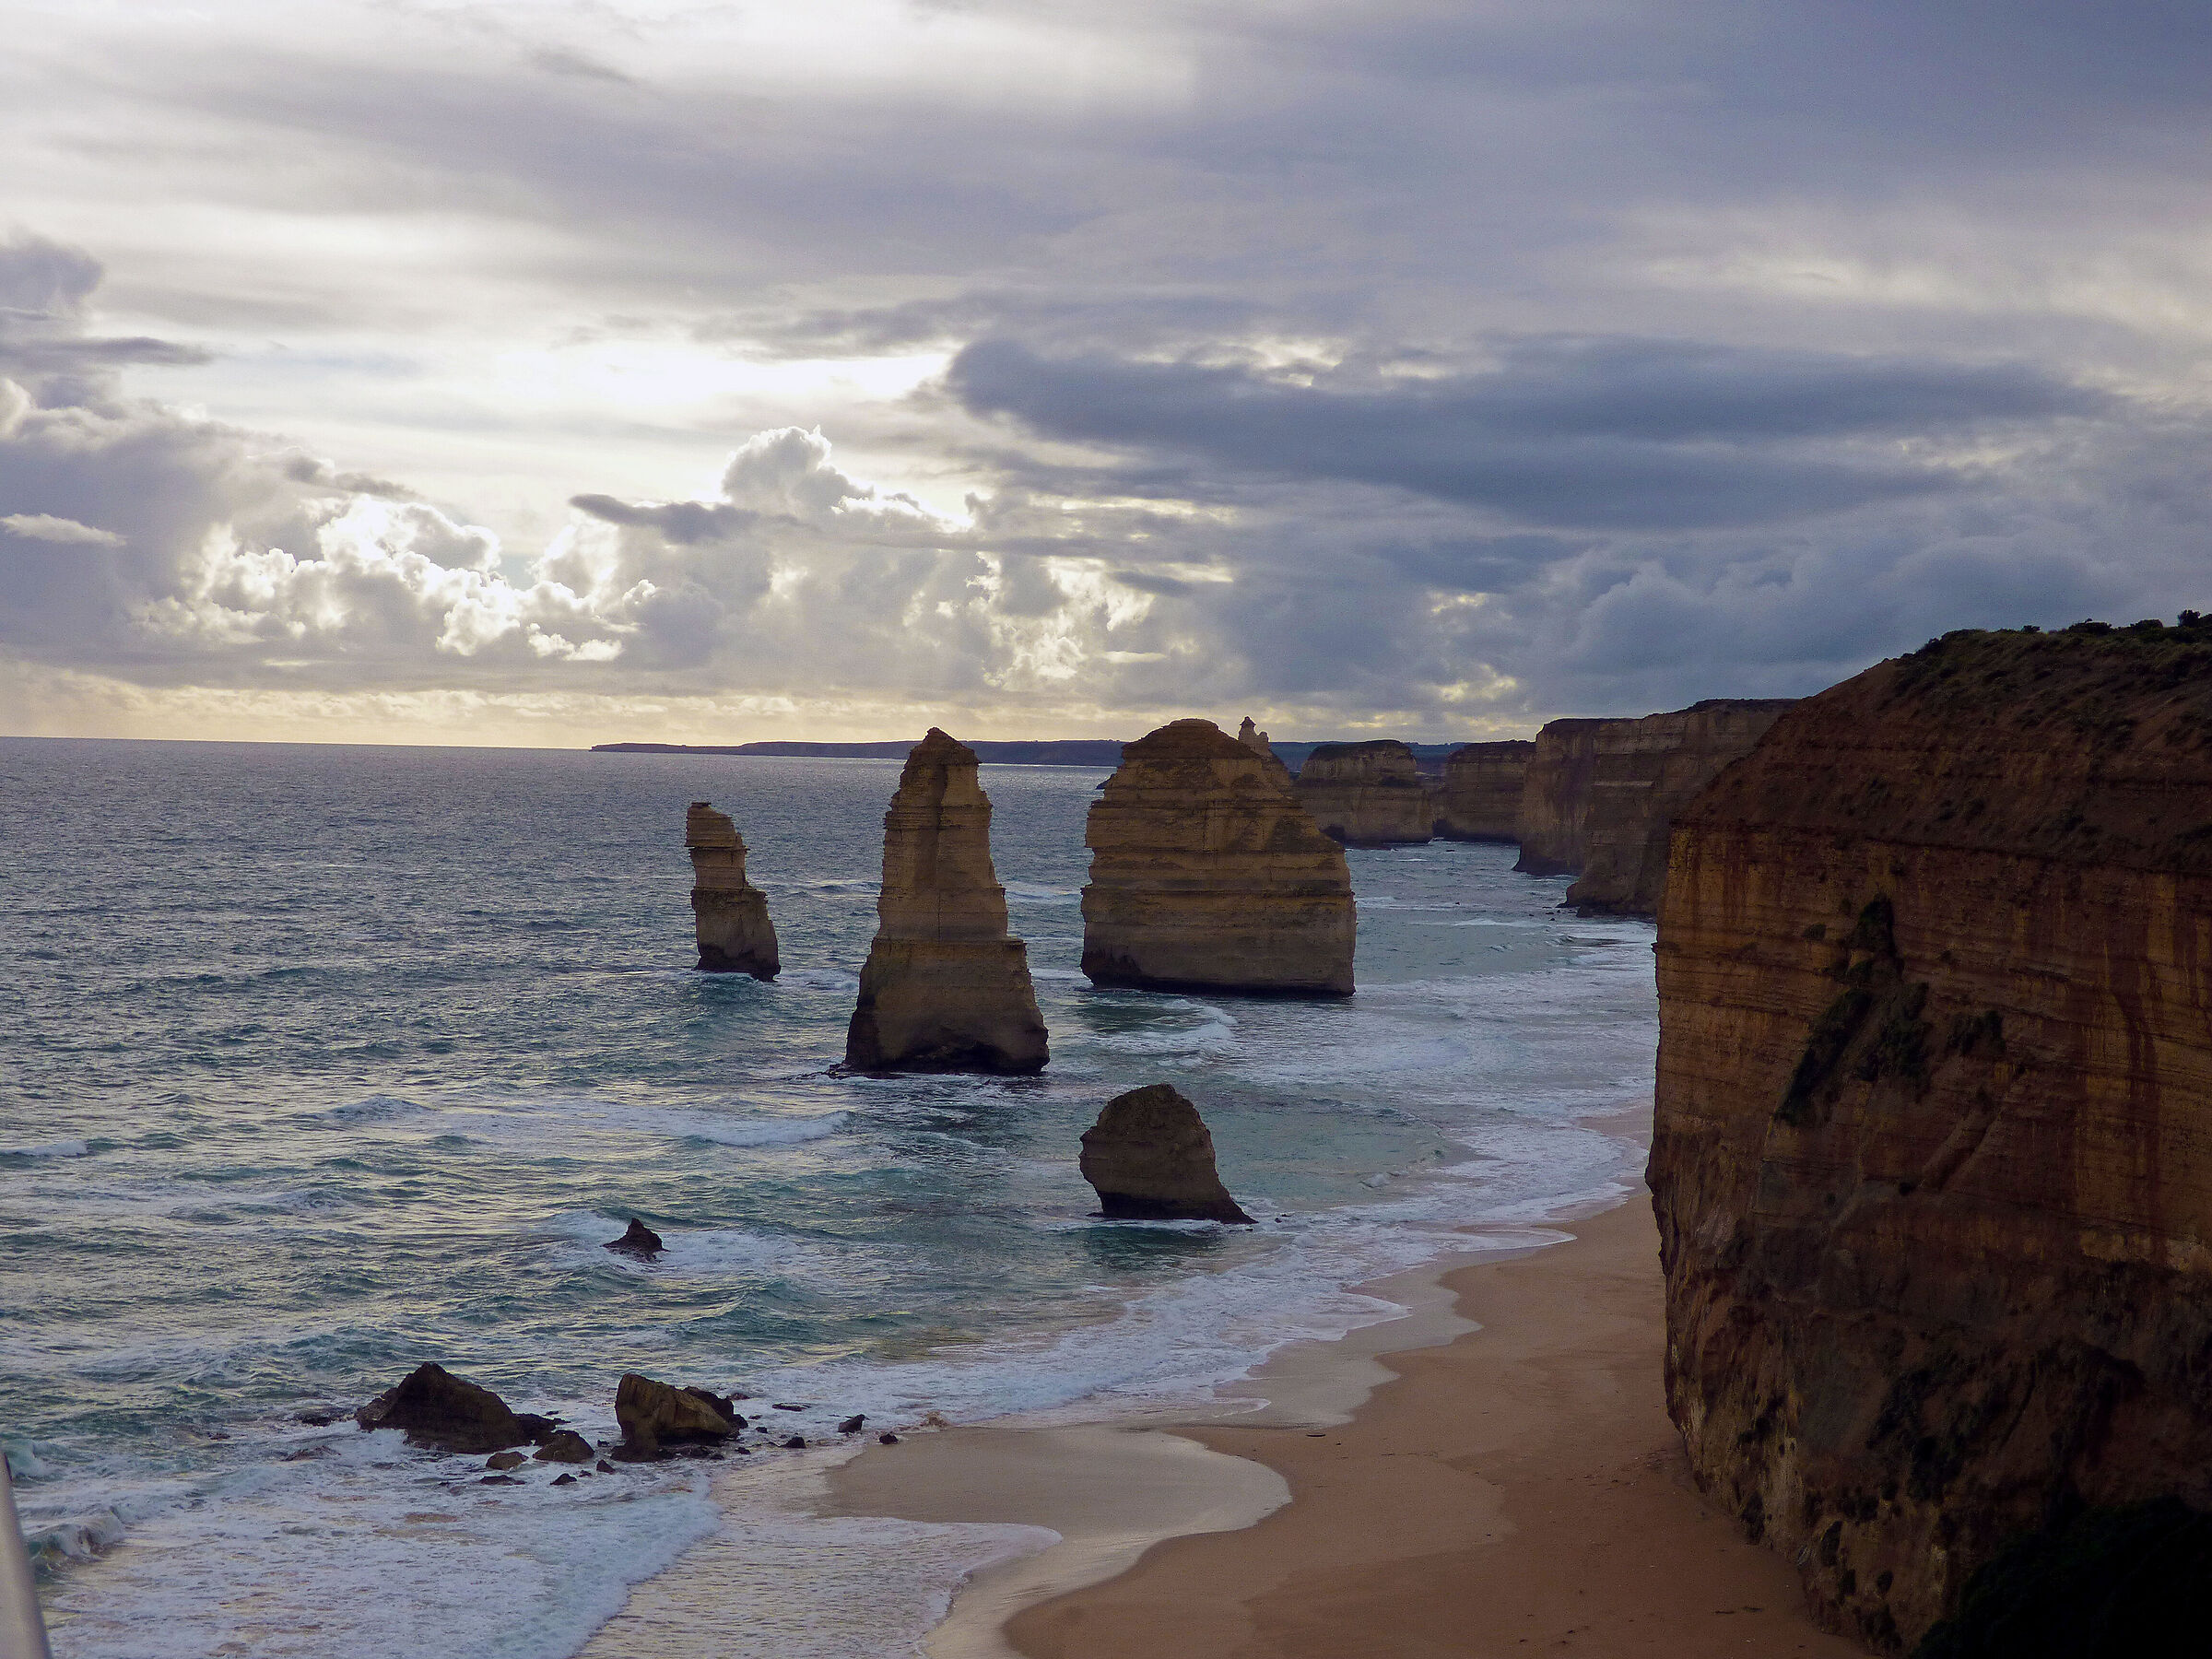 Ocean road, Australia the 12 apostles...